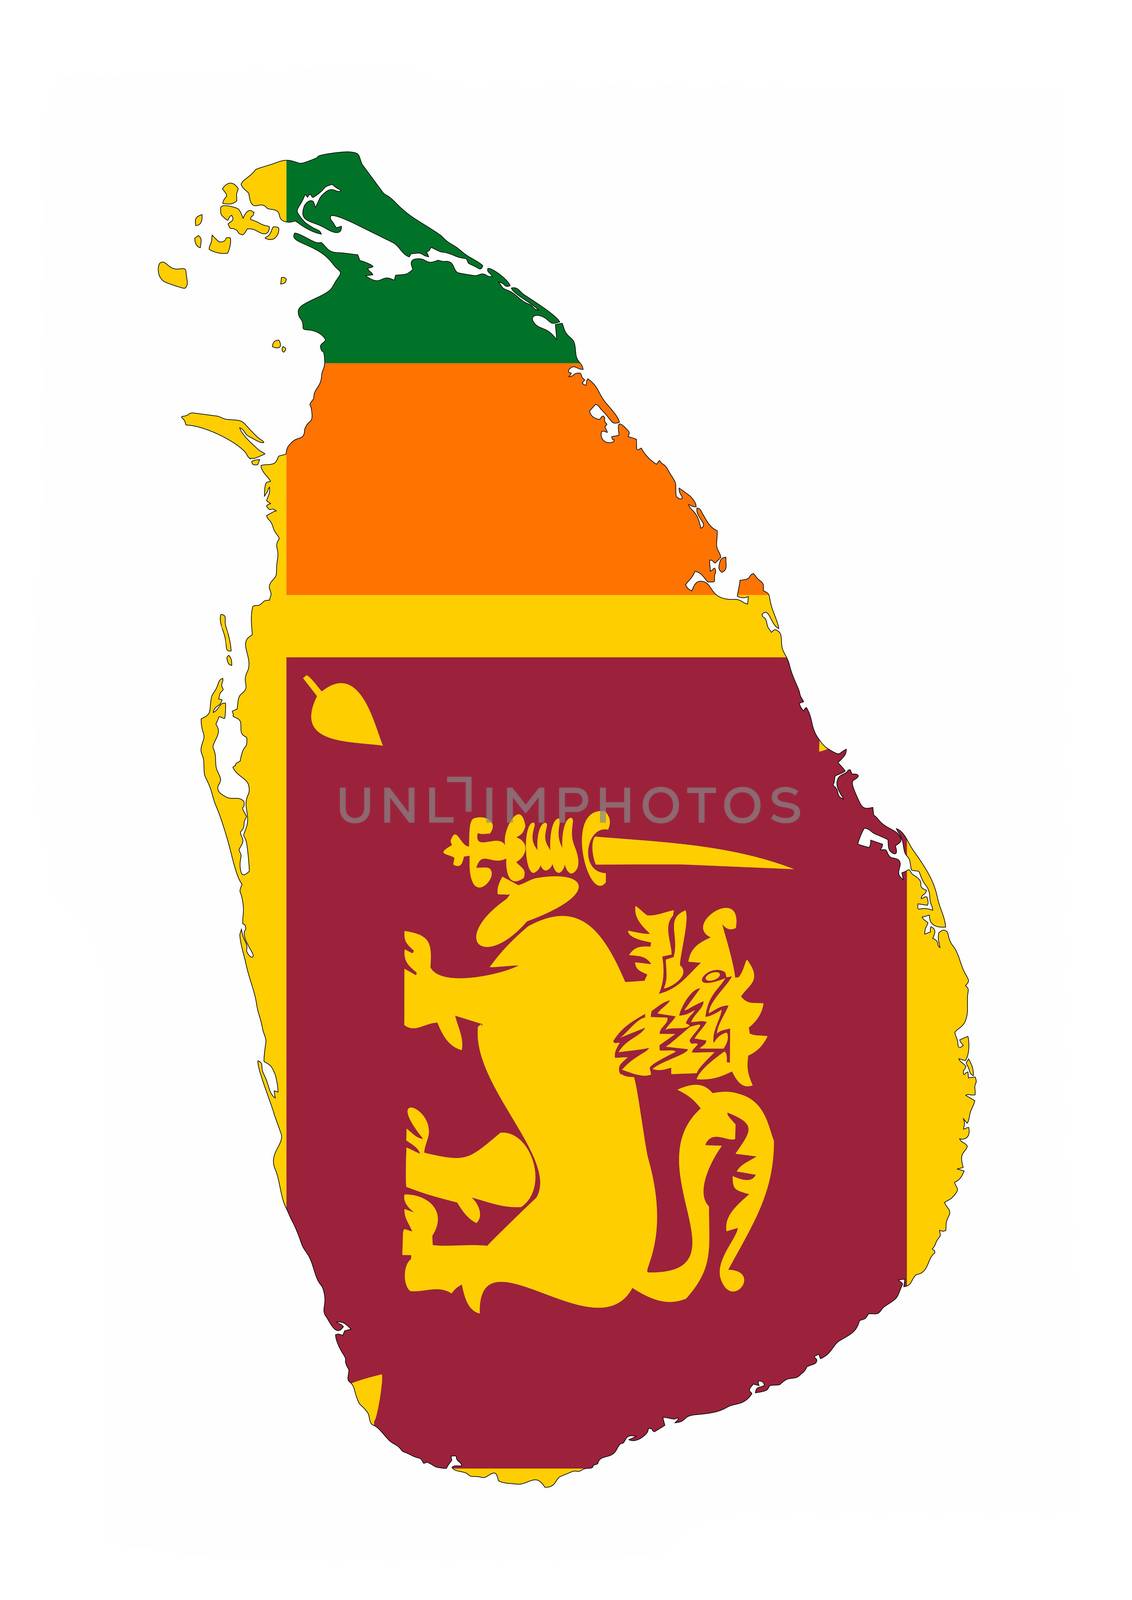 sri lanka country flag map shape national symbol